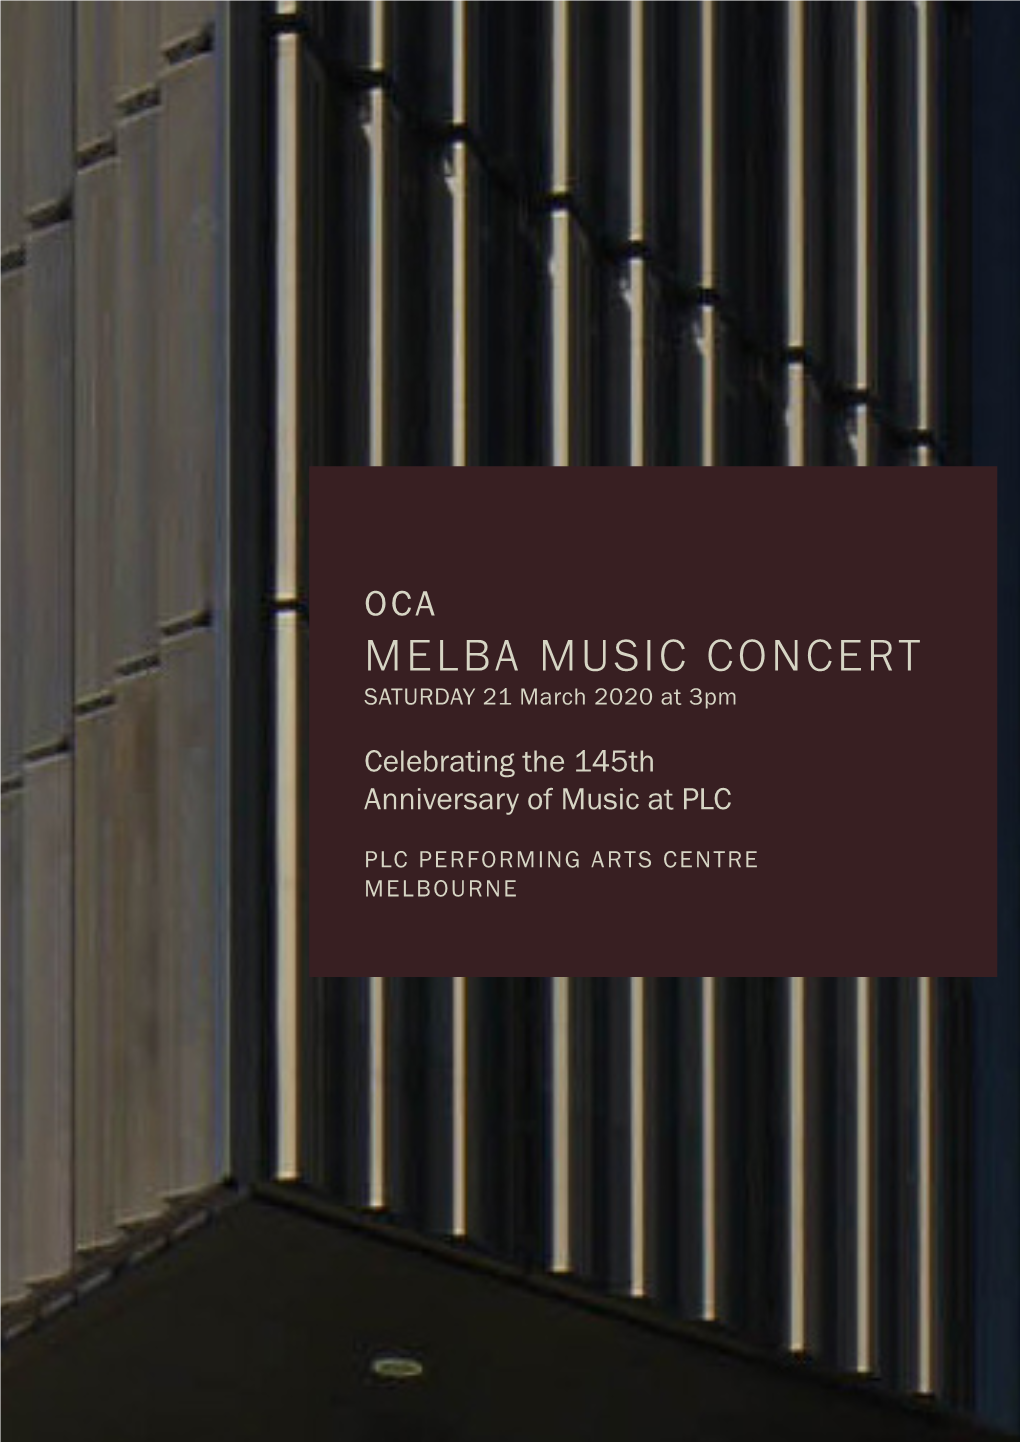 OCA MELBA MUSIC CONCERT SATURDAY 21 March 2020 at 3Pm